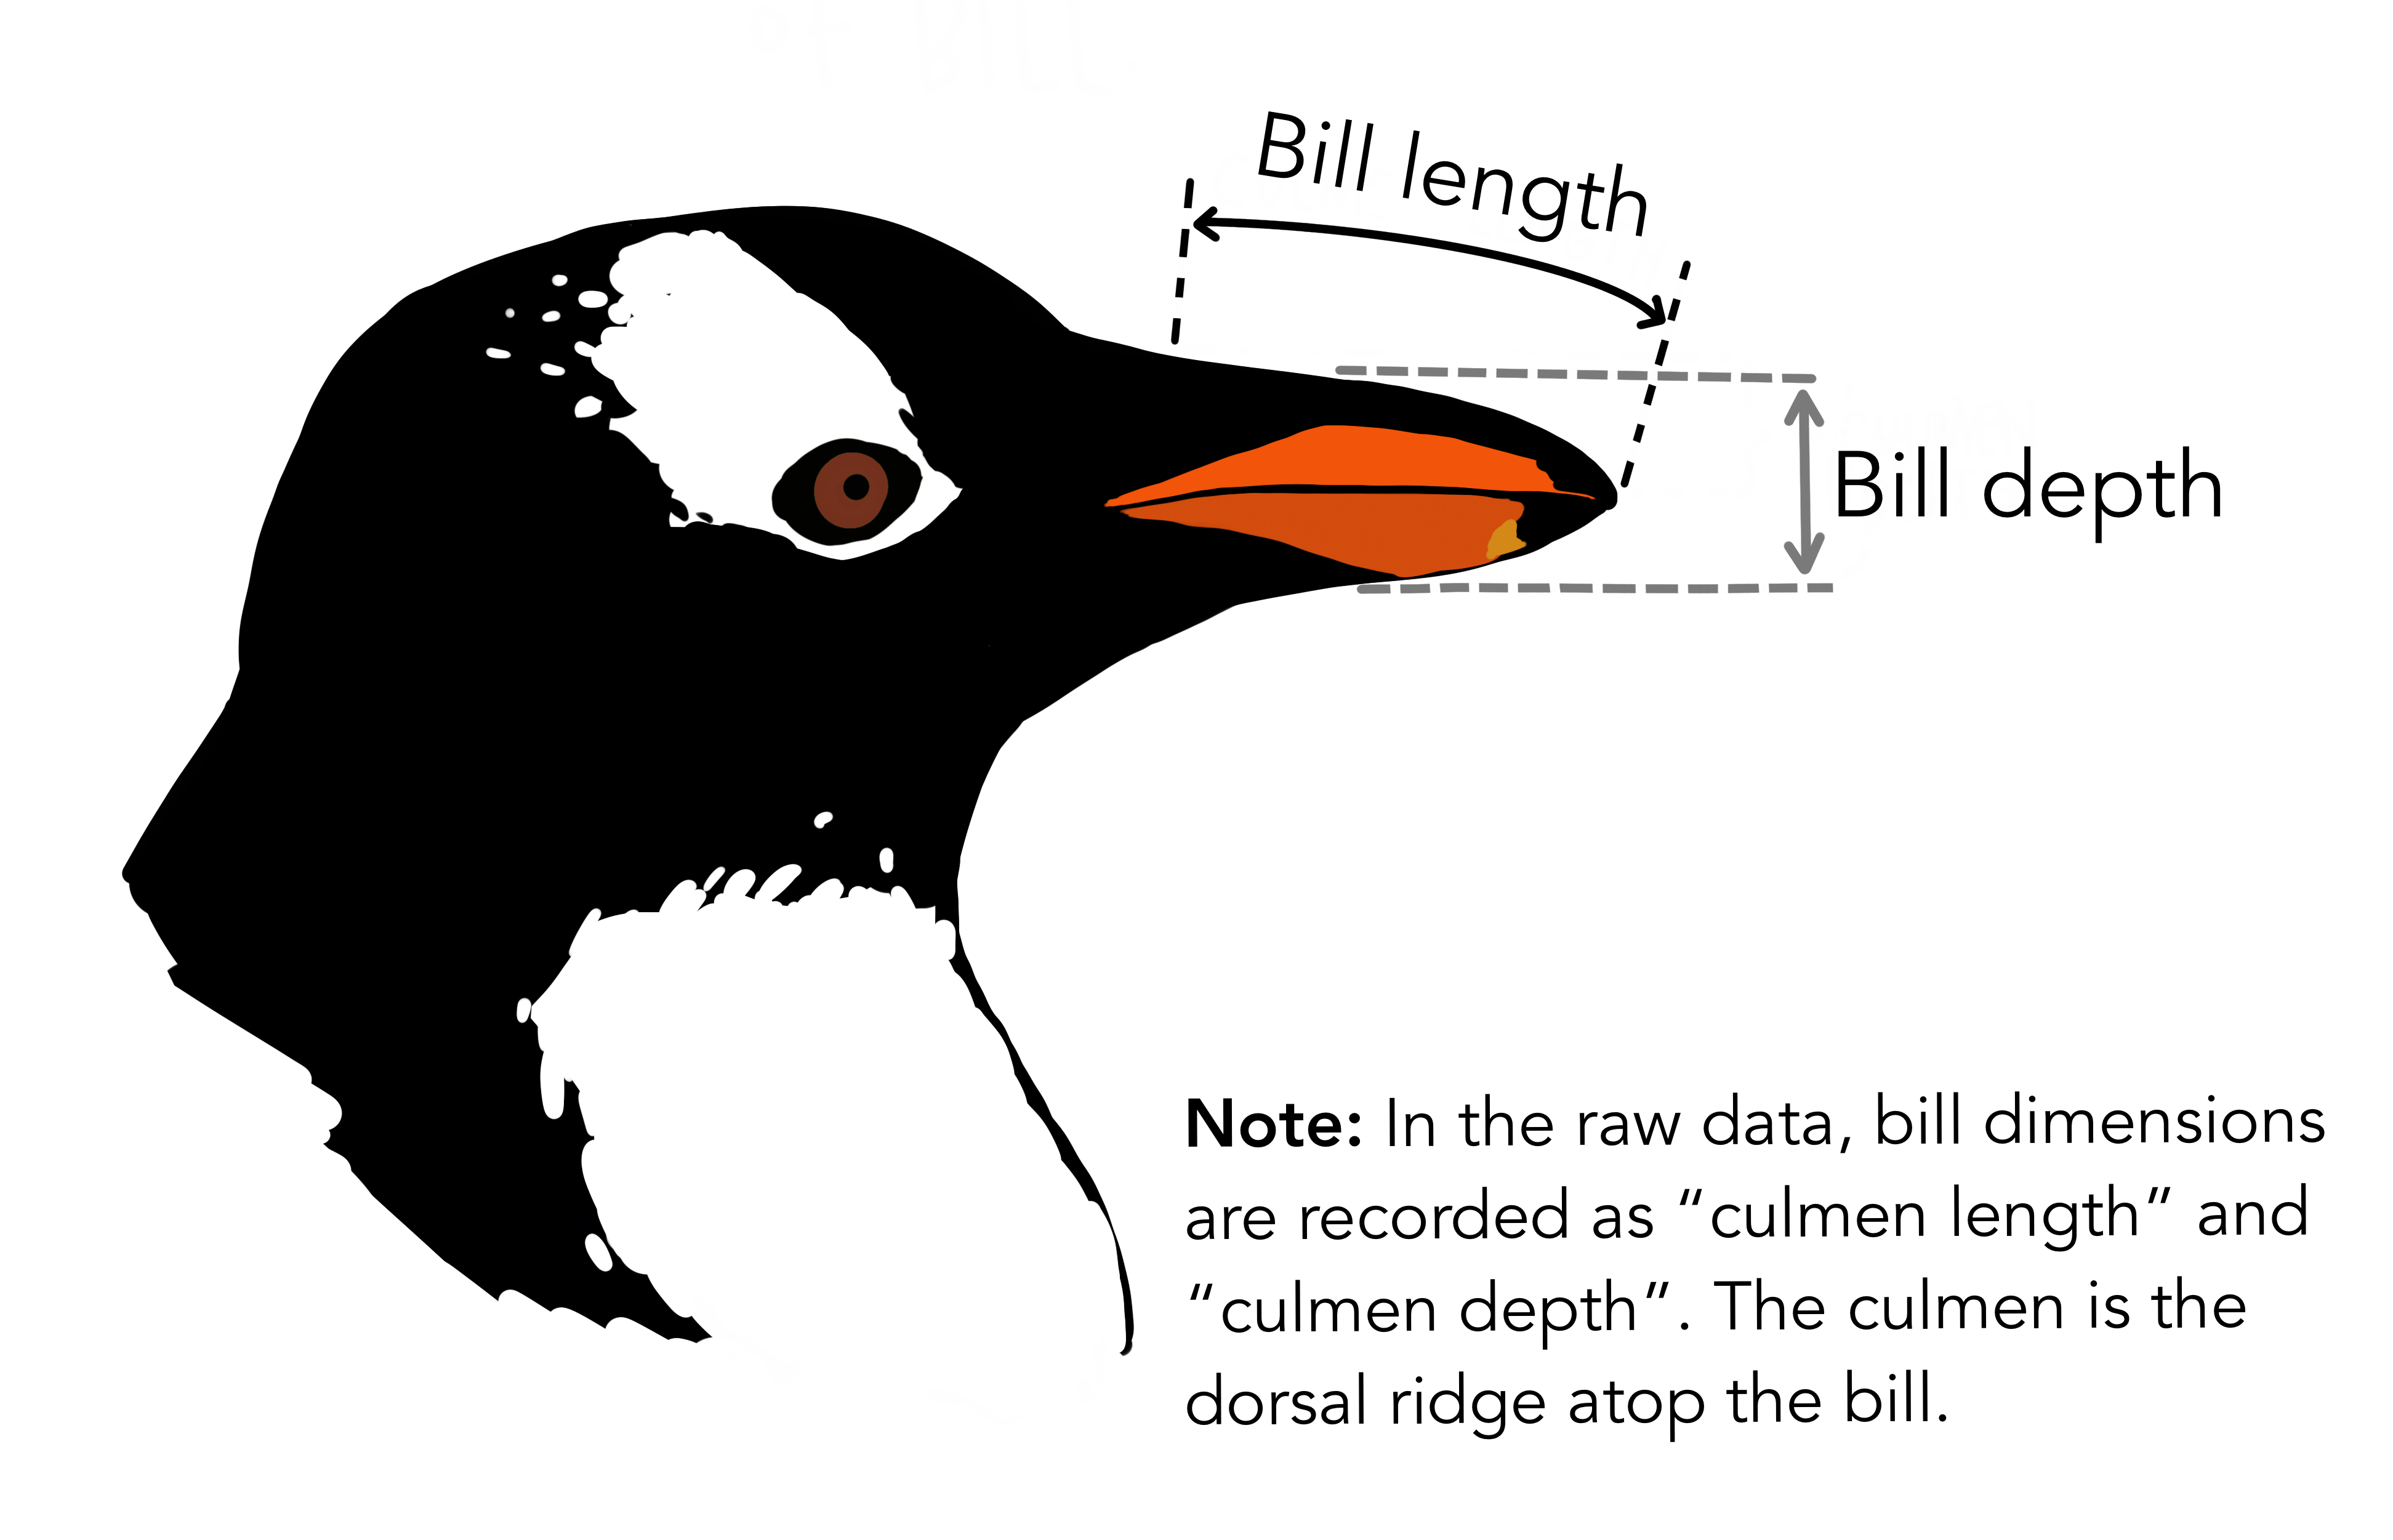 Bill length and depth measurements for each penguin.Artwork by Allison
Horst